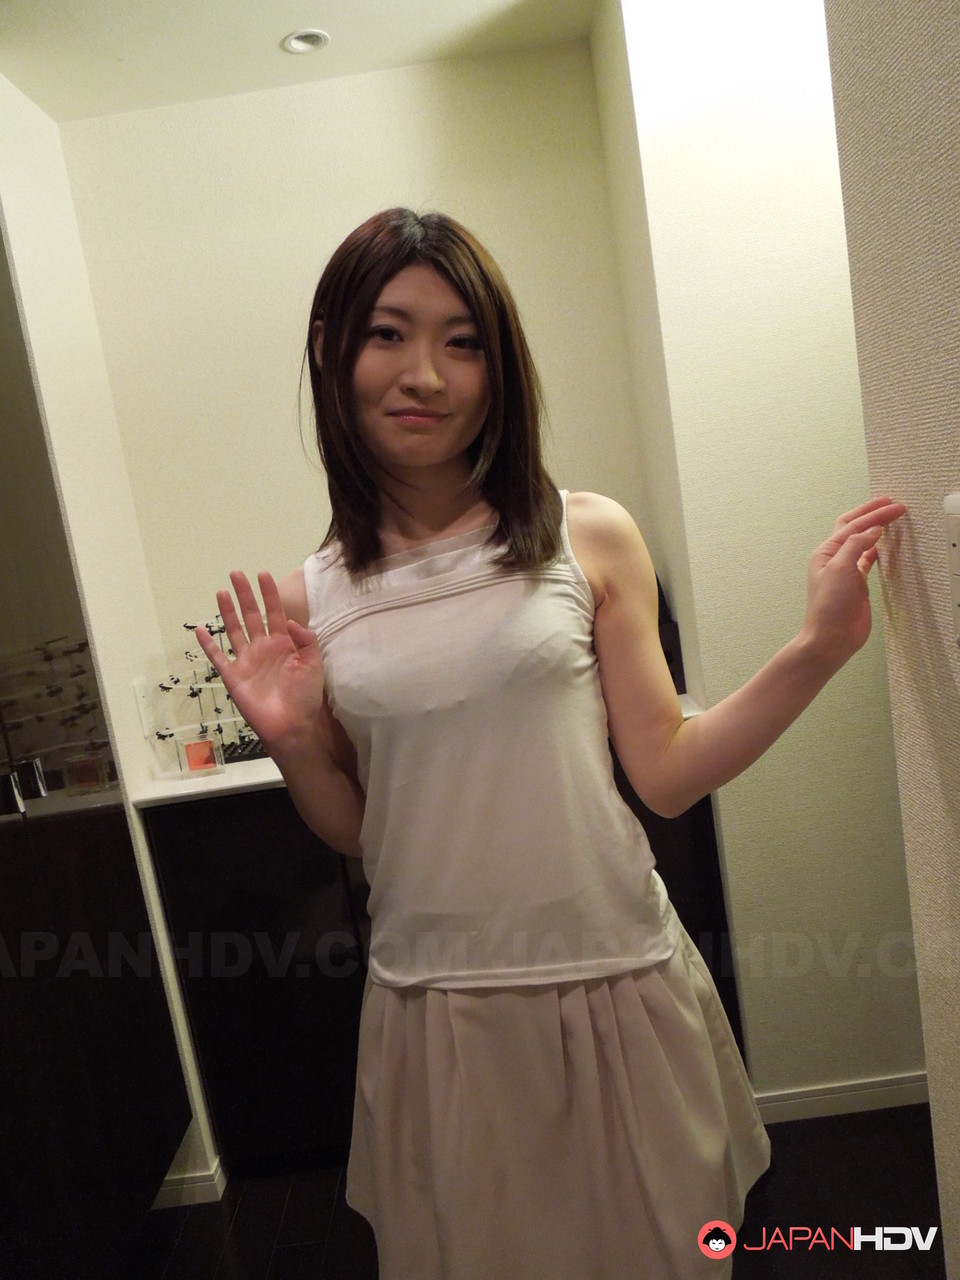 Asian housewife Shiori Moriya toys her horny pussy with an electrical dildo 色情照片 #426072872 | Japan HDV Pics, Shiori Moriya, Japanese, 手机色情